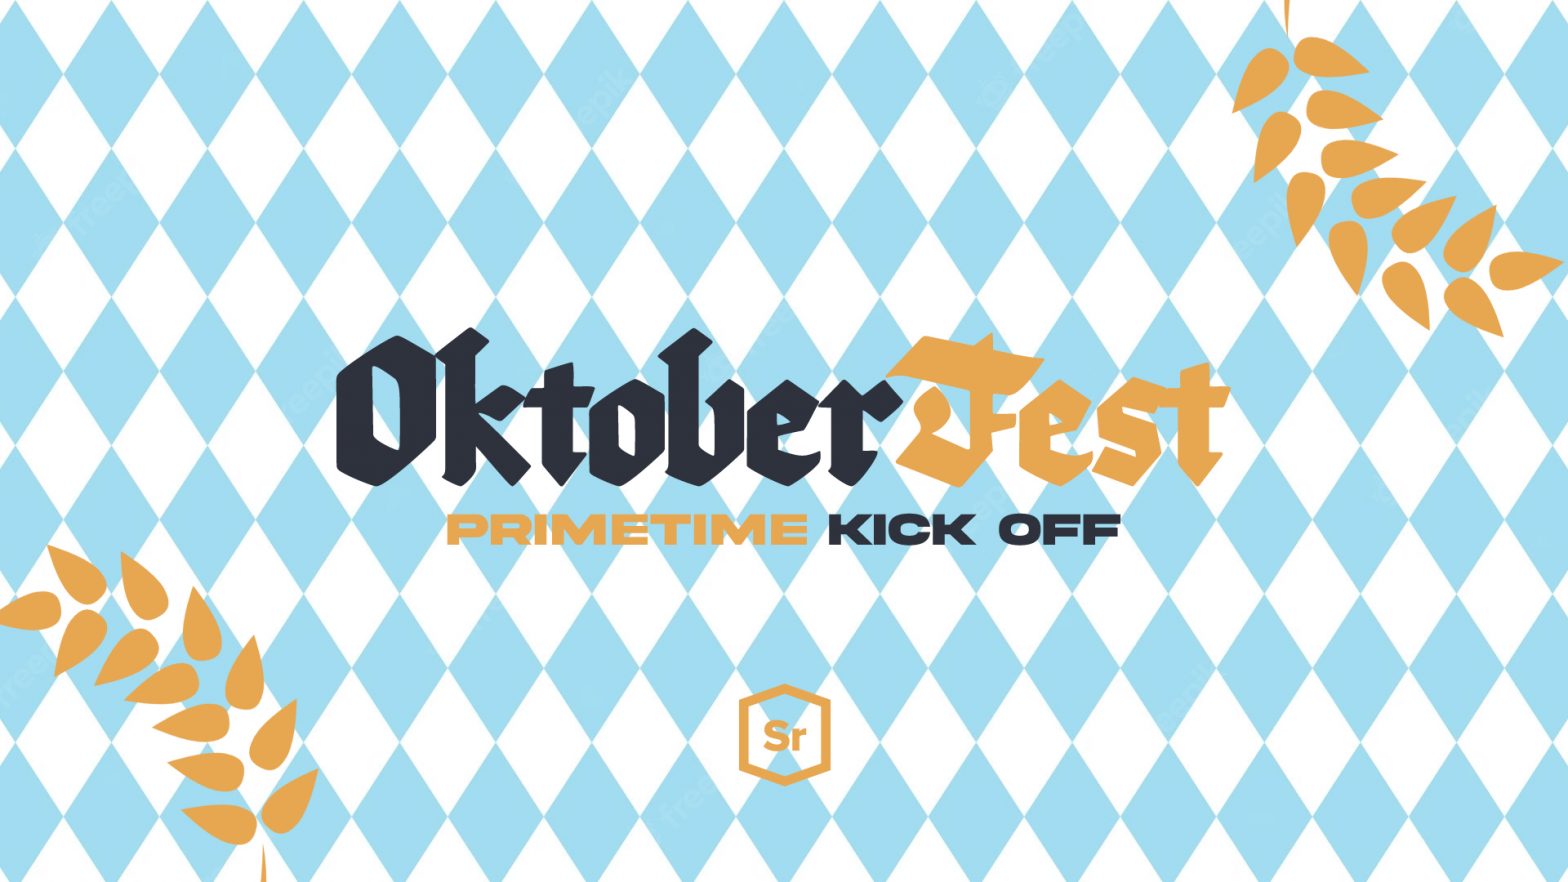 Oktoberfest – Chapel Seniors Kick Off image